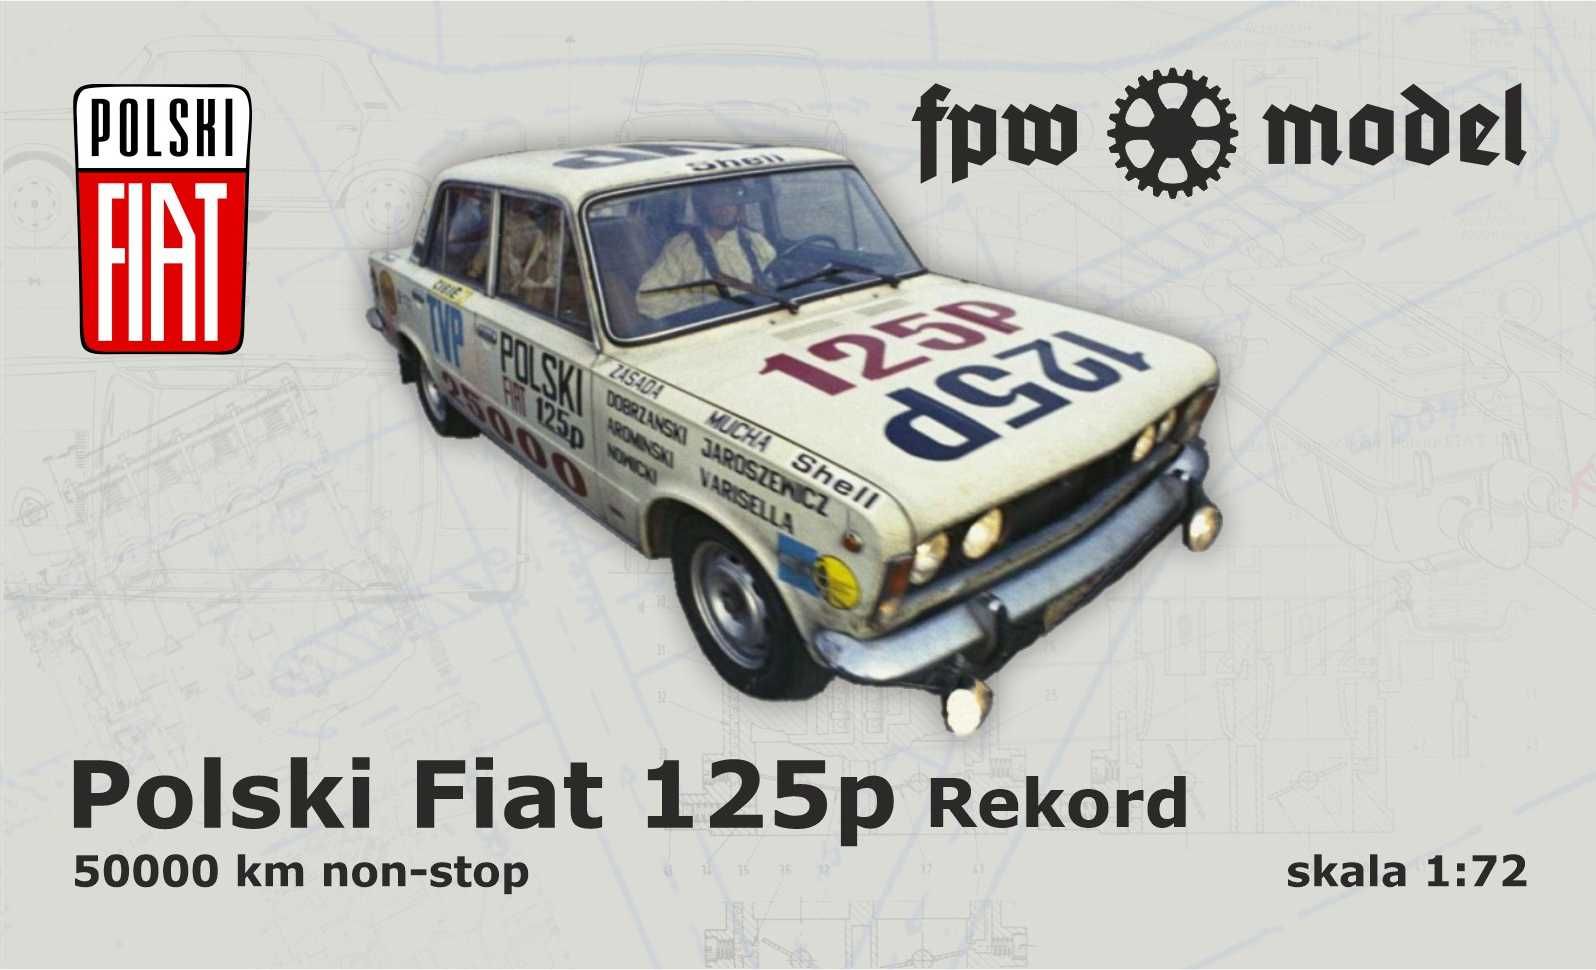 Polski Fiat 125p "Rekord" (50000 km non-stop)